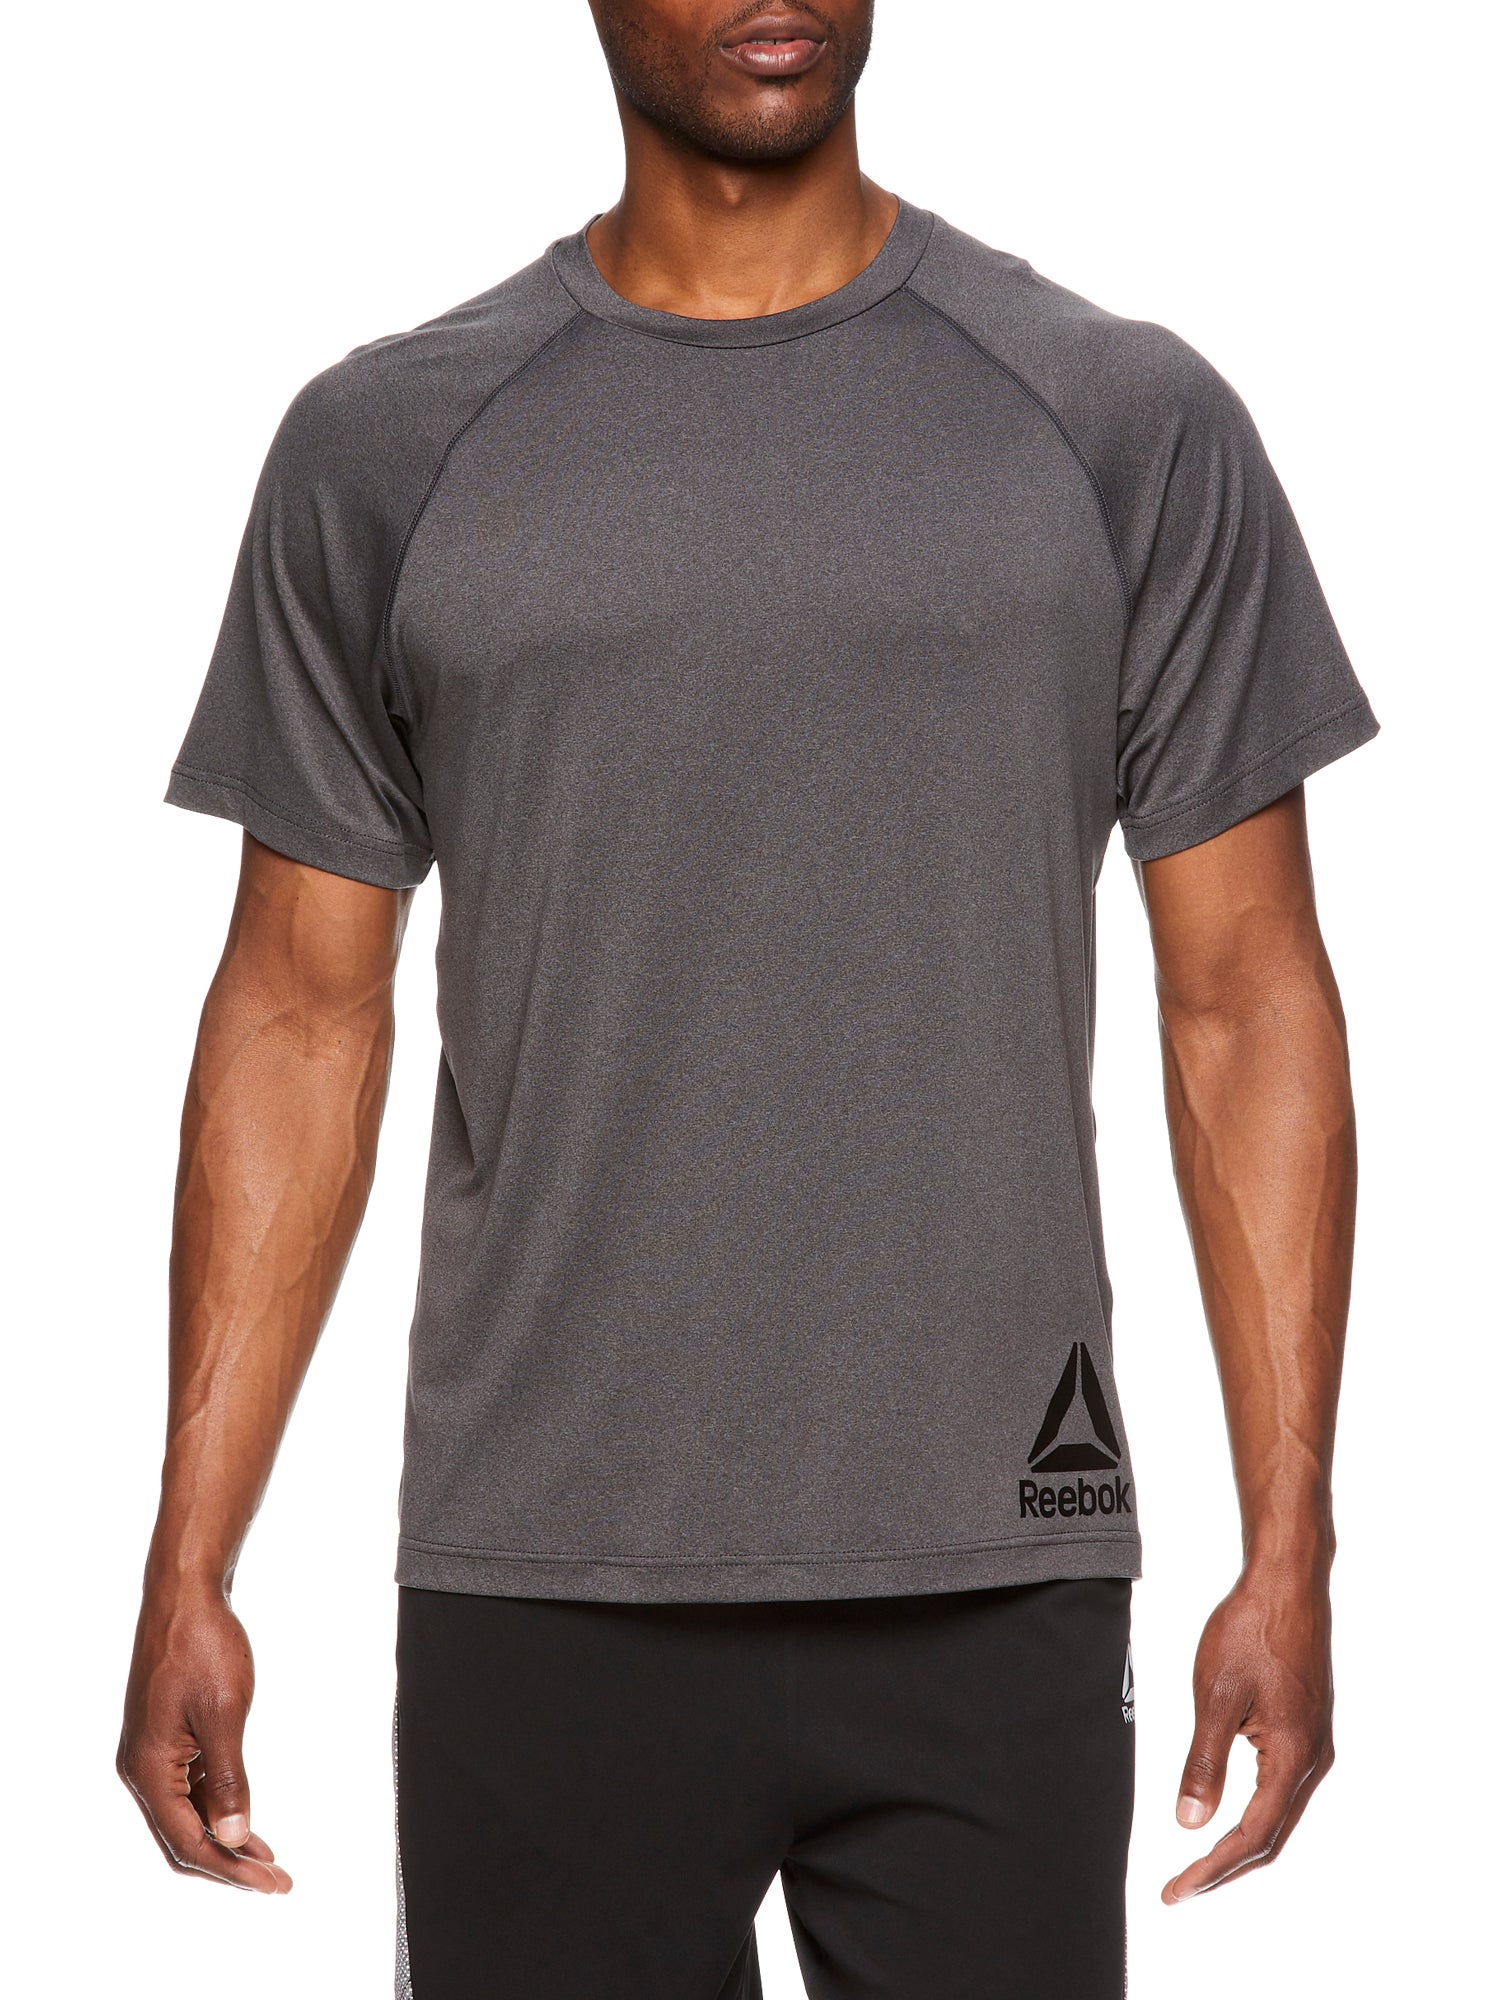 Reebok Mens T-shirt Duration Short Sleeve Performance Training Tops - Charcoal